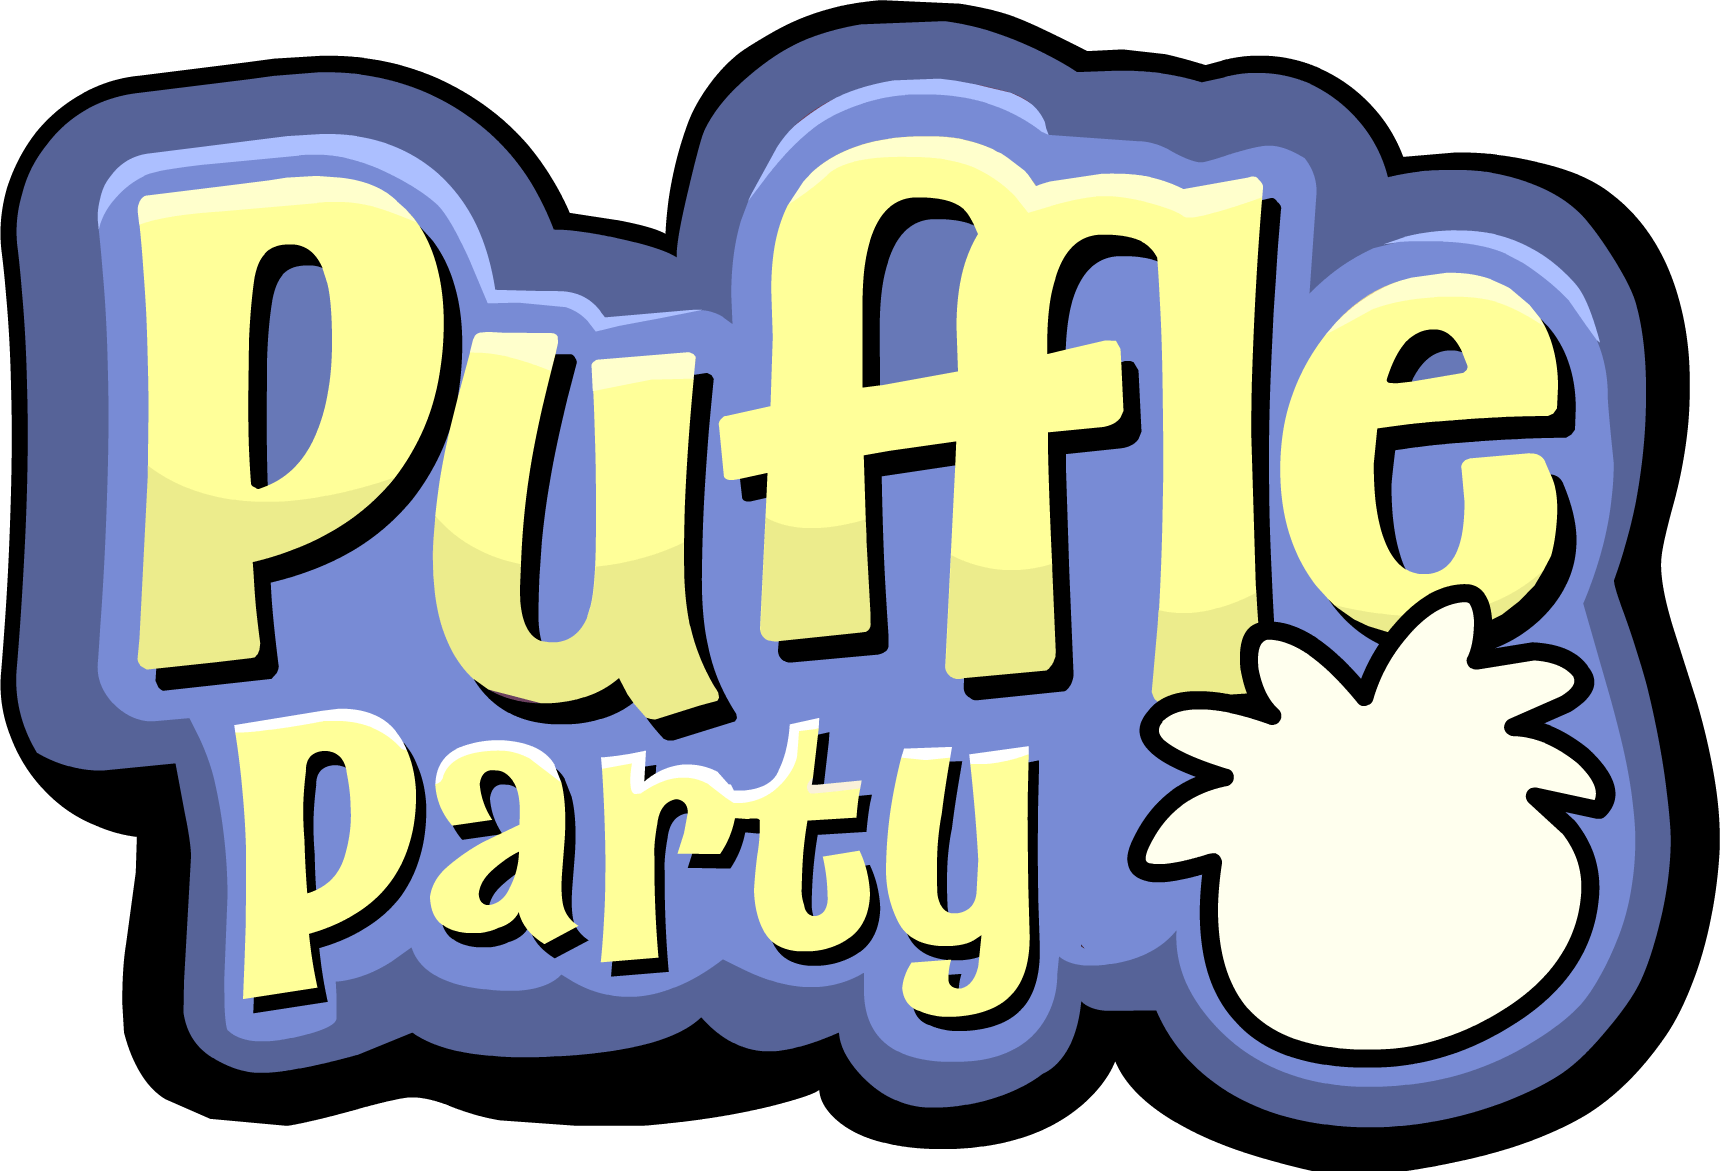 Club Penguin Logo - Puffle Party 2012 | Club Penguin Wiki | FANDOM powered by Wikia